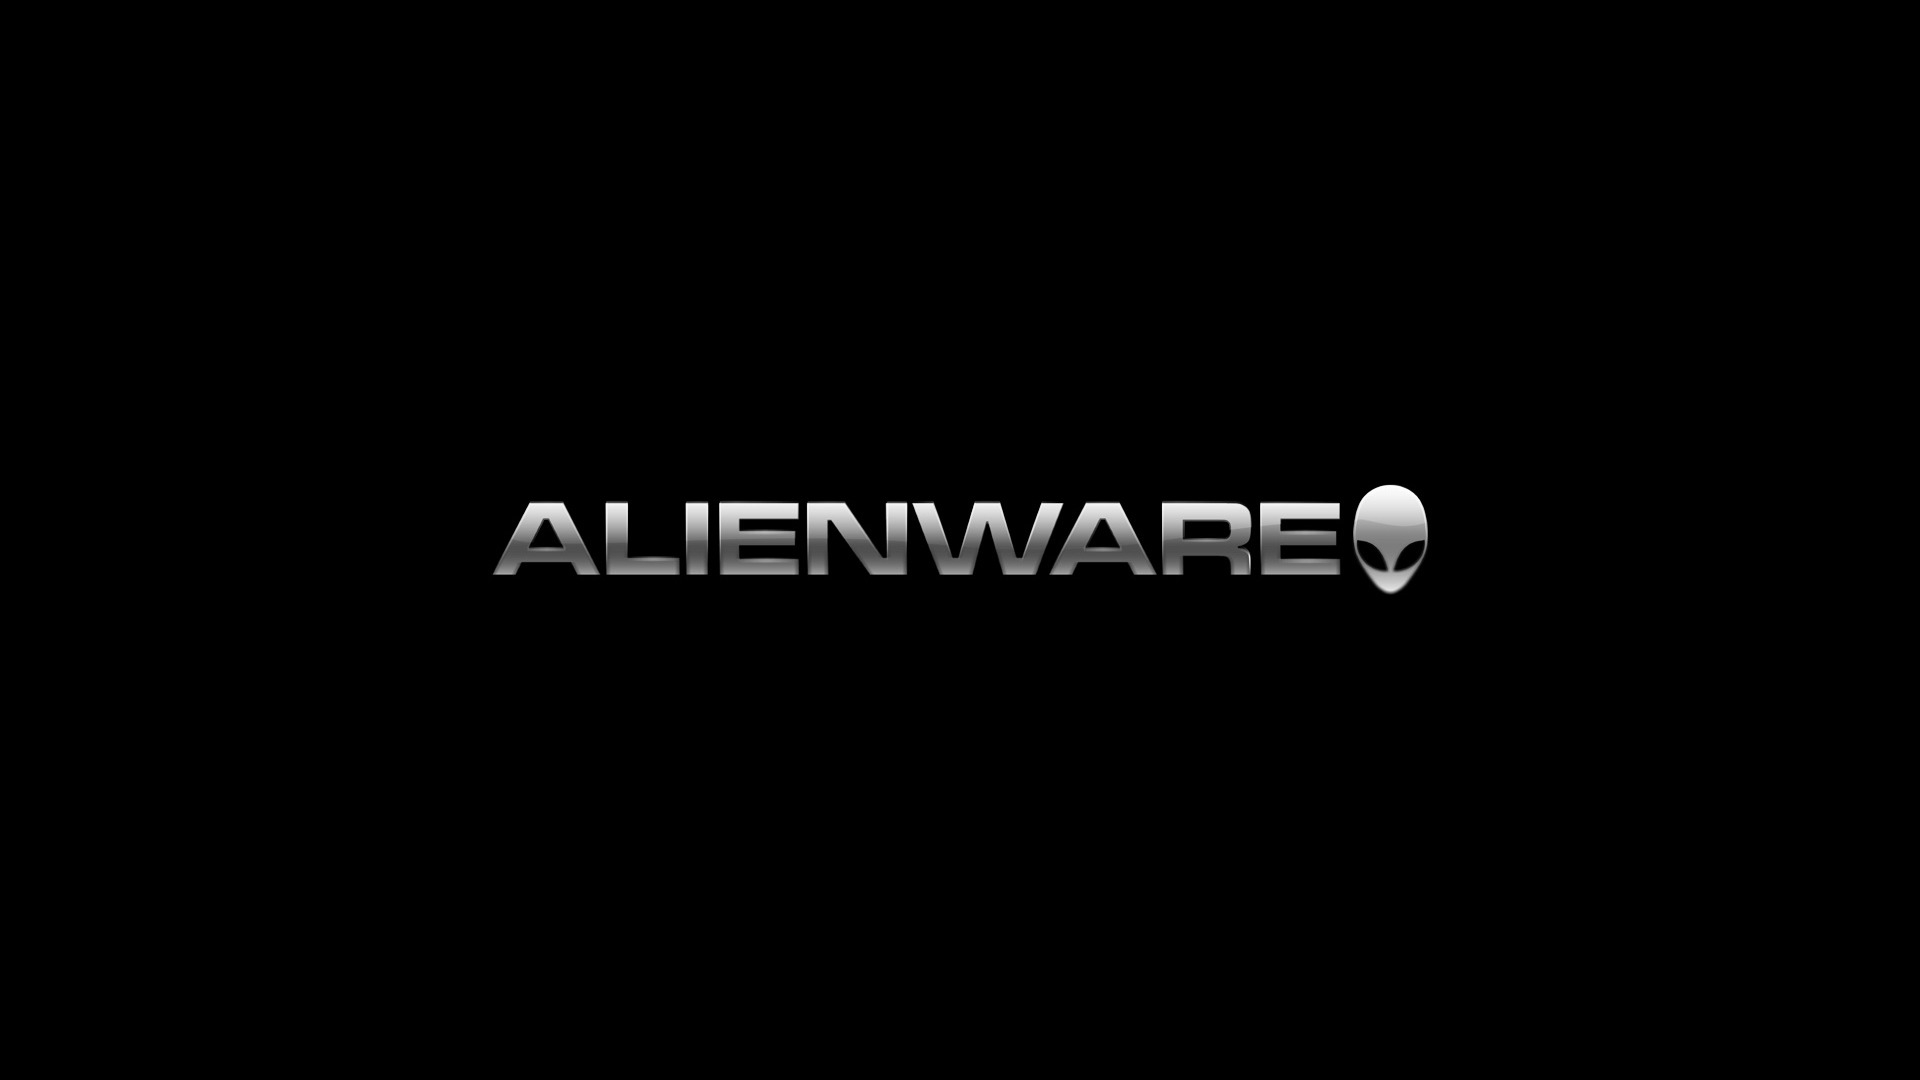 Black Alienware for 1920 x 1080 HDTV 1080p resolution